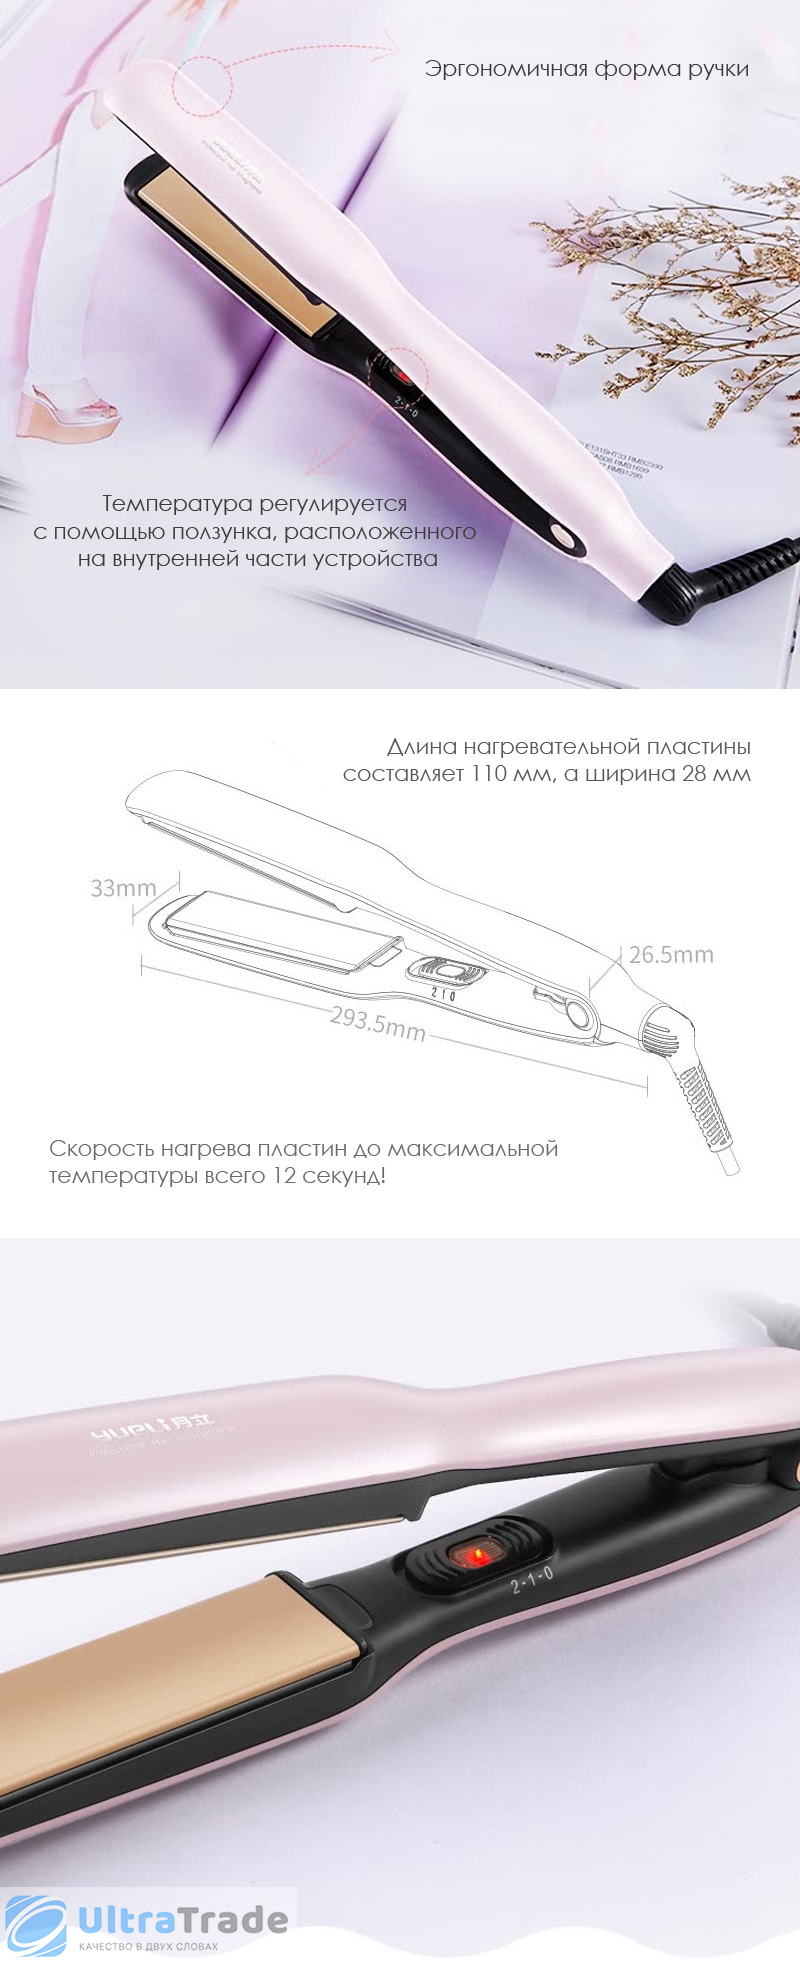 Выпрямитель для волос Xiaomi Yueli Hot Steam Straightener Pearl White (HS-505)